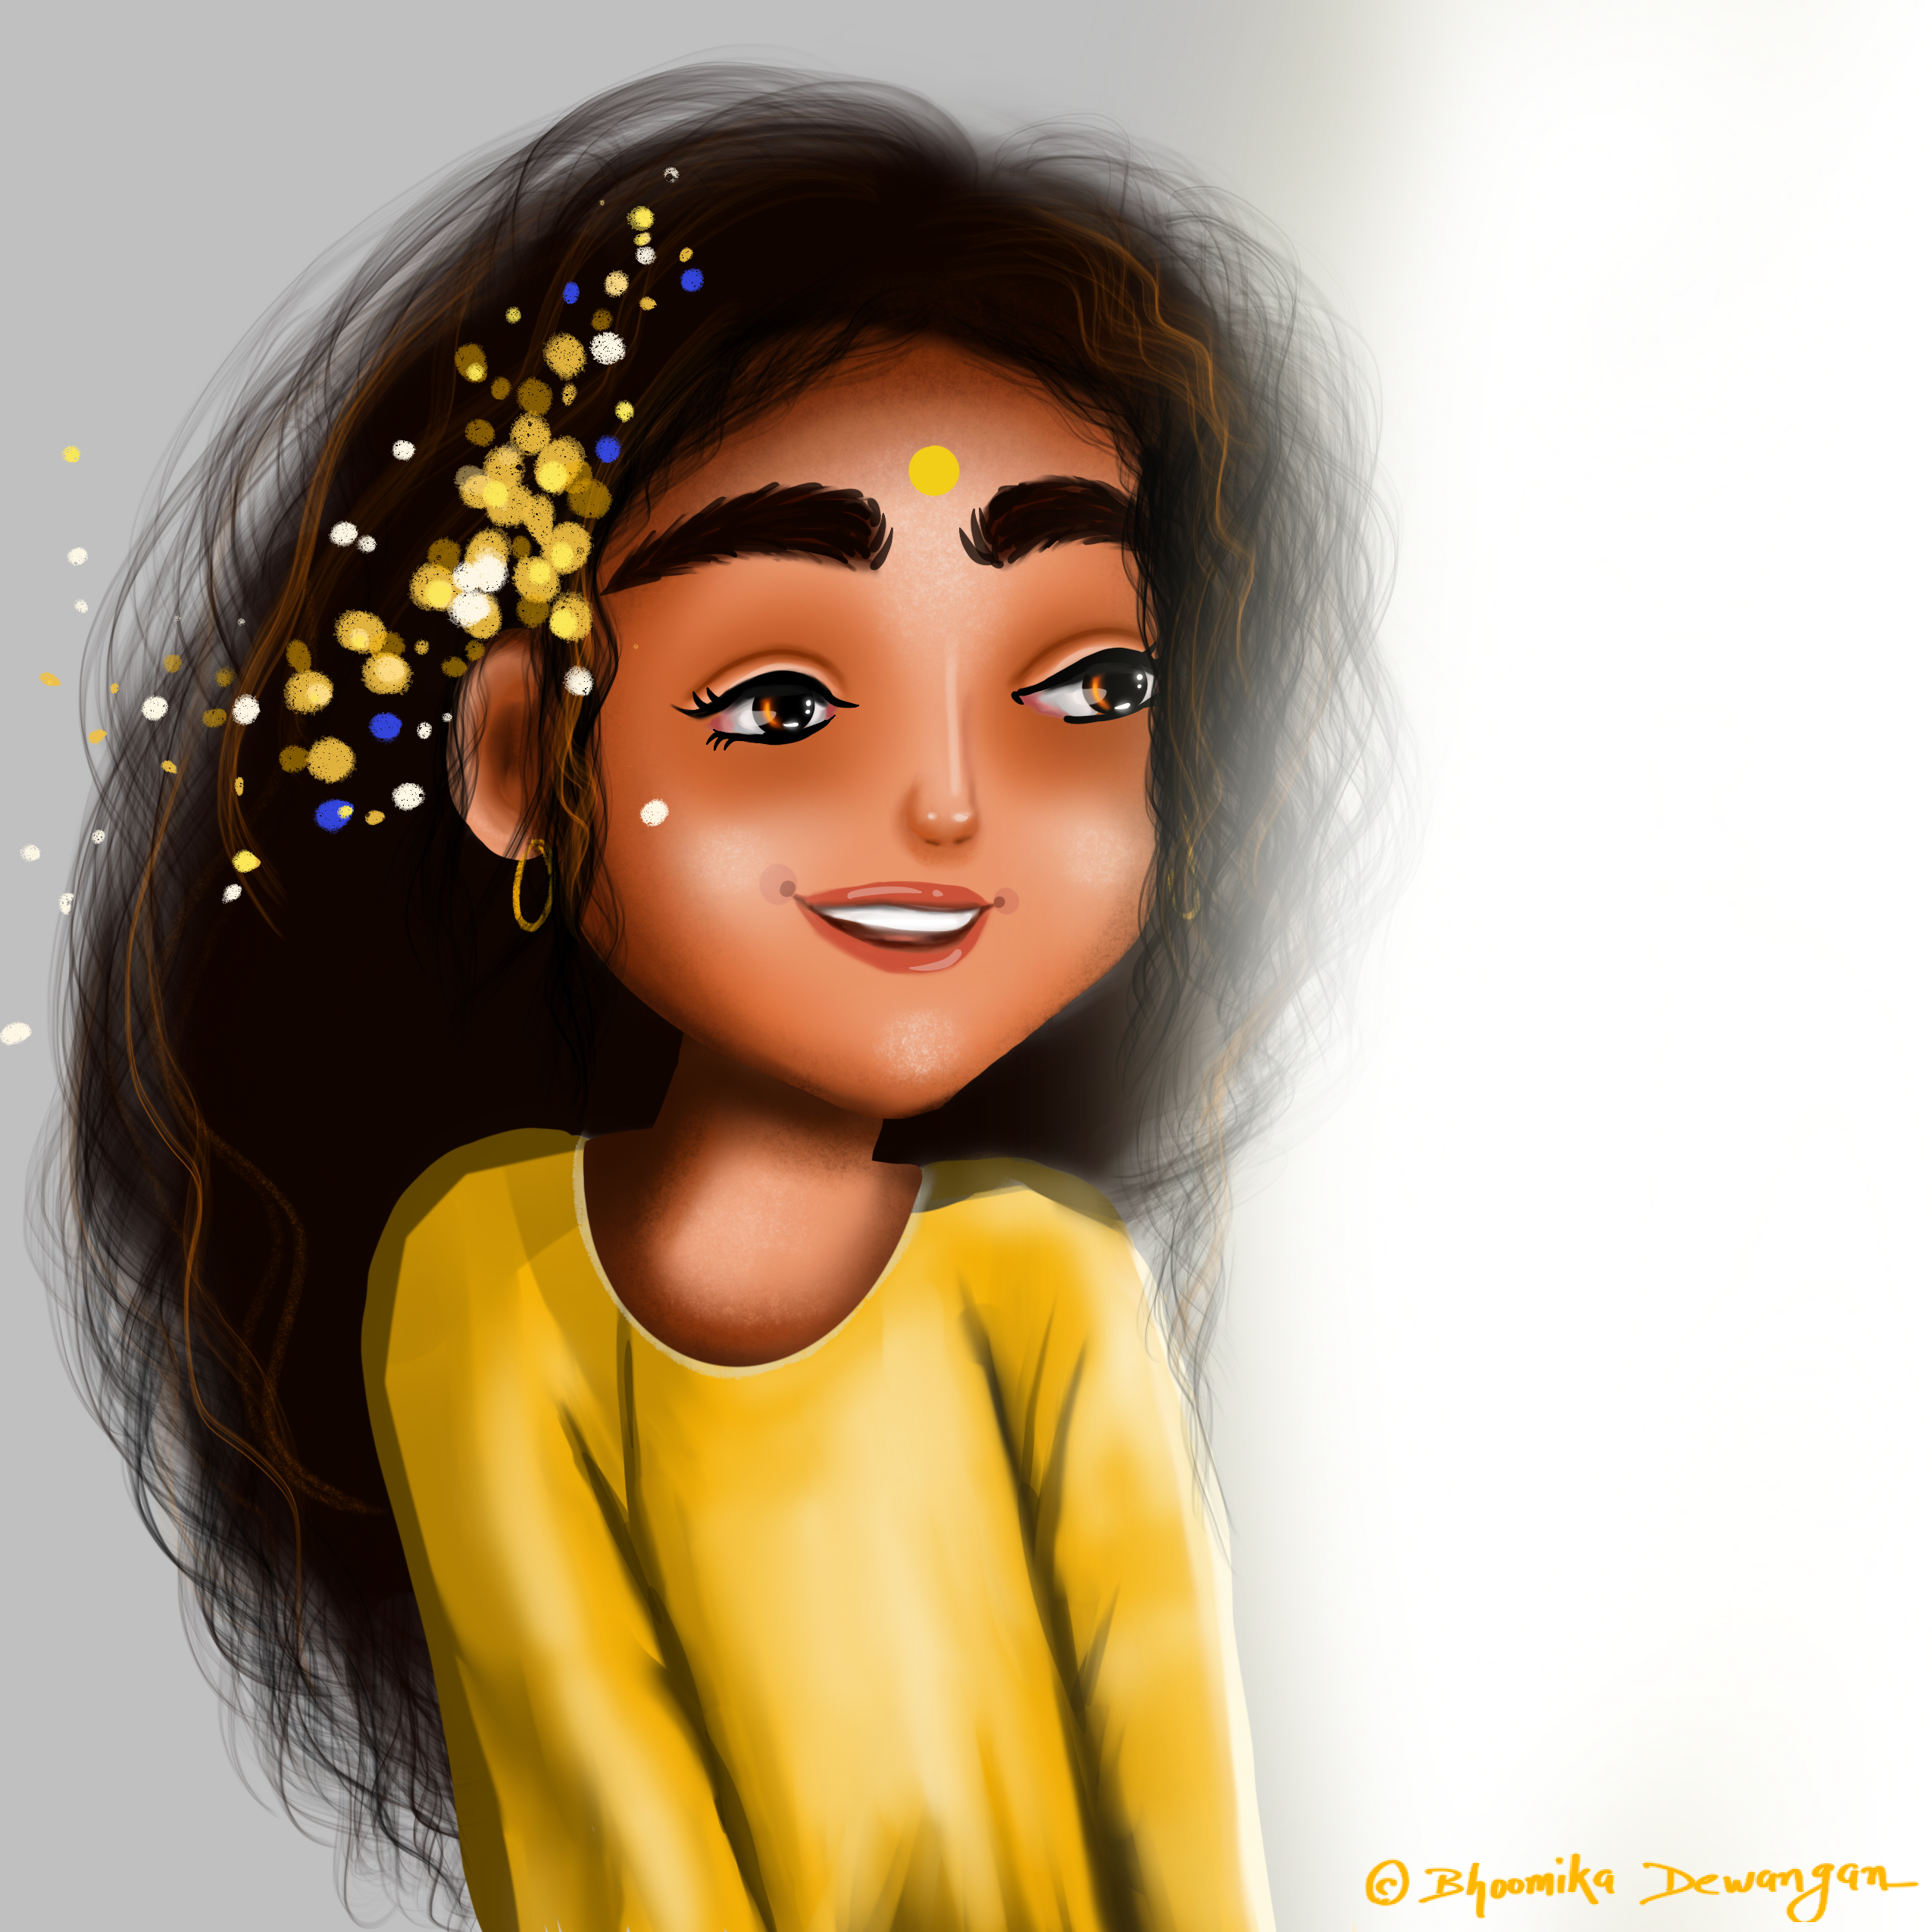 Cute girl-illustration-bhoomisart-digital art